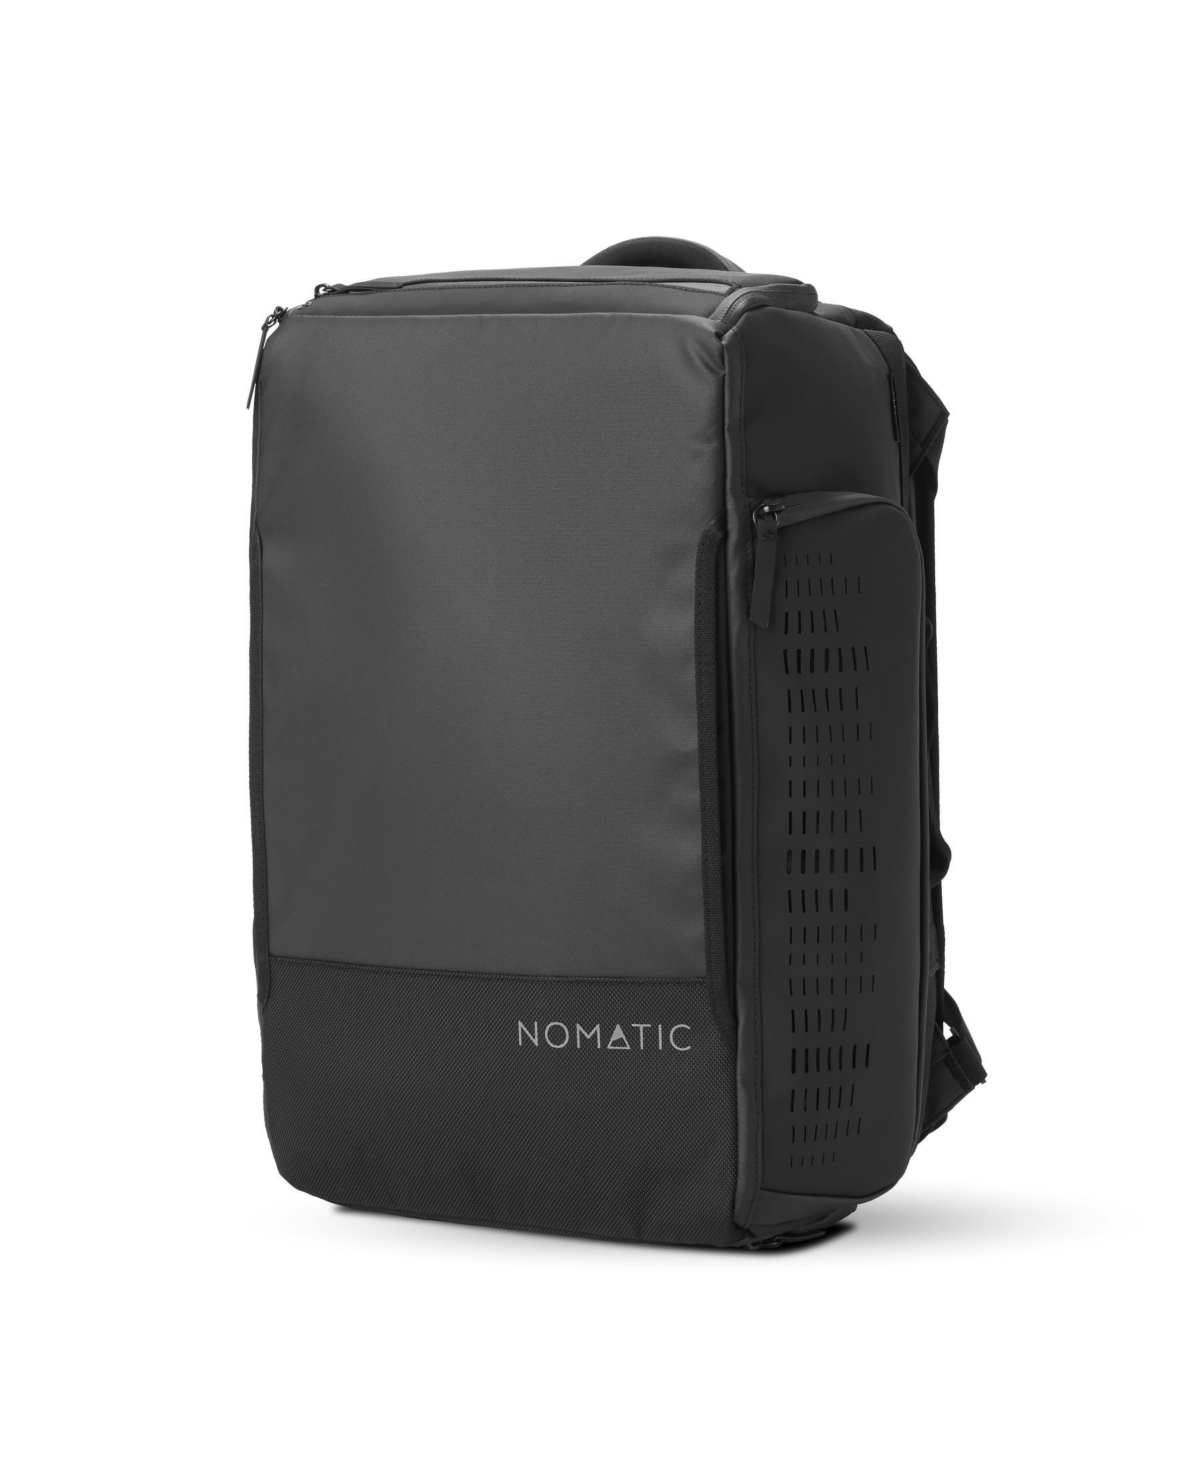 30L Travel Bag - Travel Backpack/Gym Duffle - Black